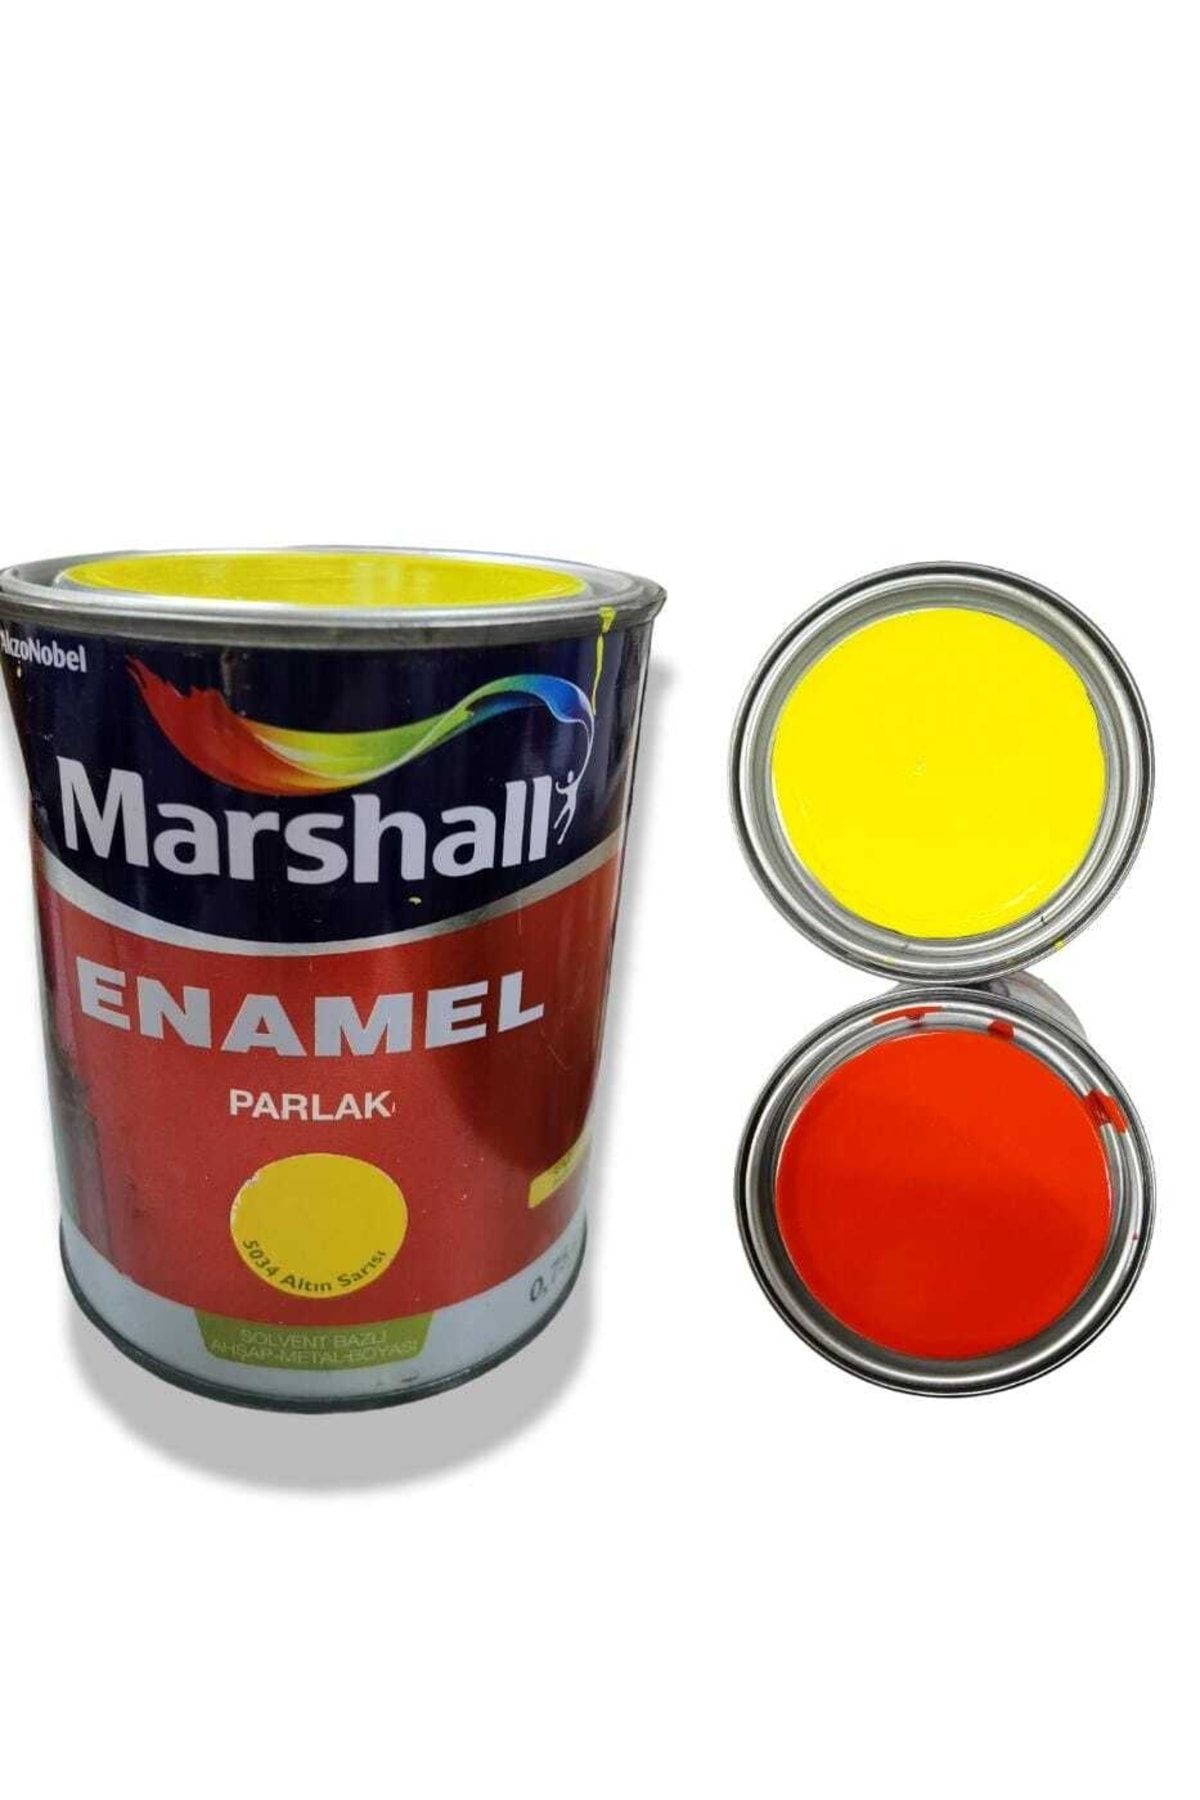 Marshall 2 Adet 0,75 Lt.(1 Kg) Galatasaray Renkleri Enamel Parlak Metal Ahşap Boyası (sentetik Boya)